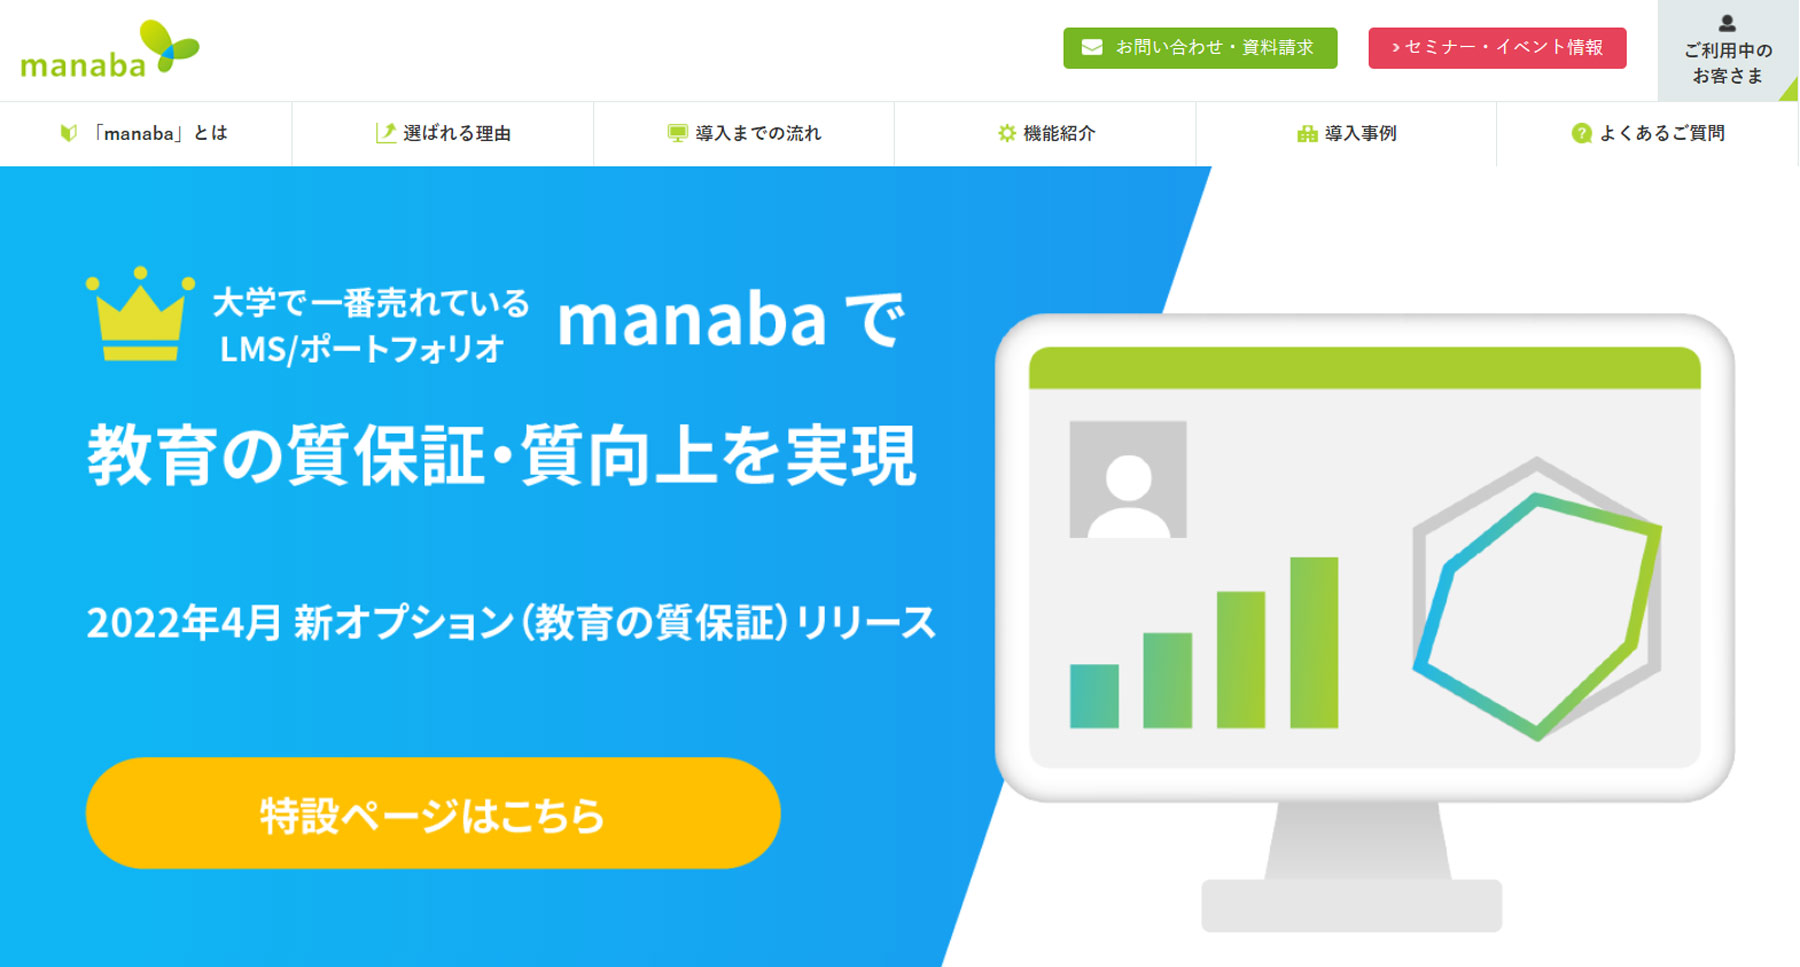 manaba公式Webサイト